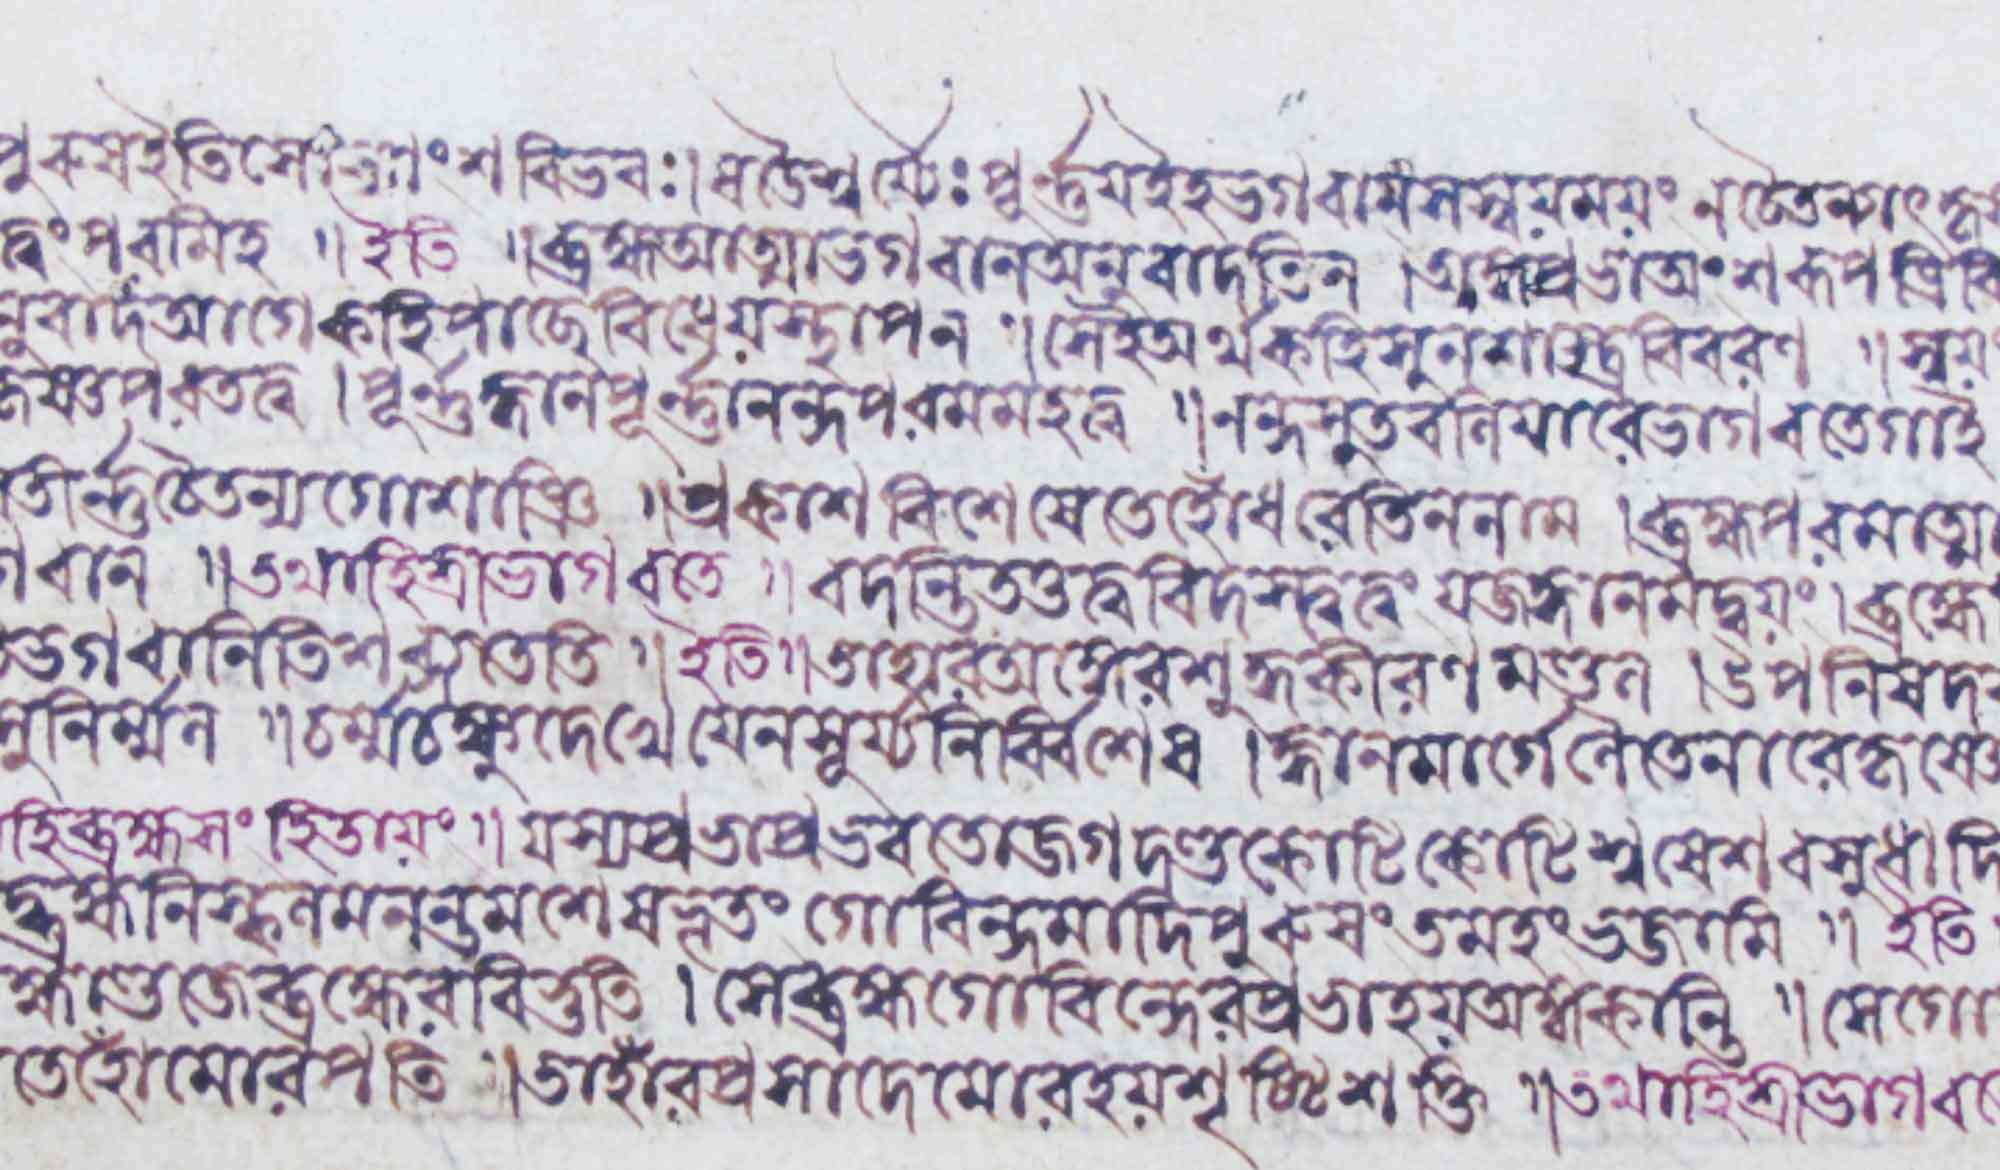 Vaiṣṇava Siddhānta Mālā